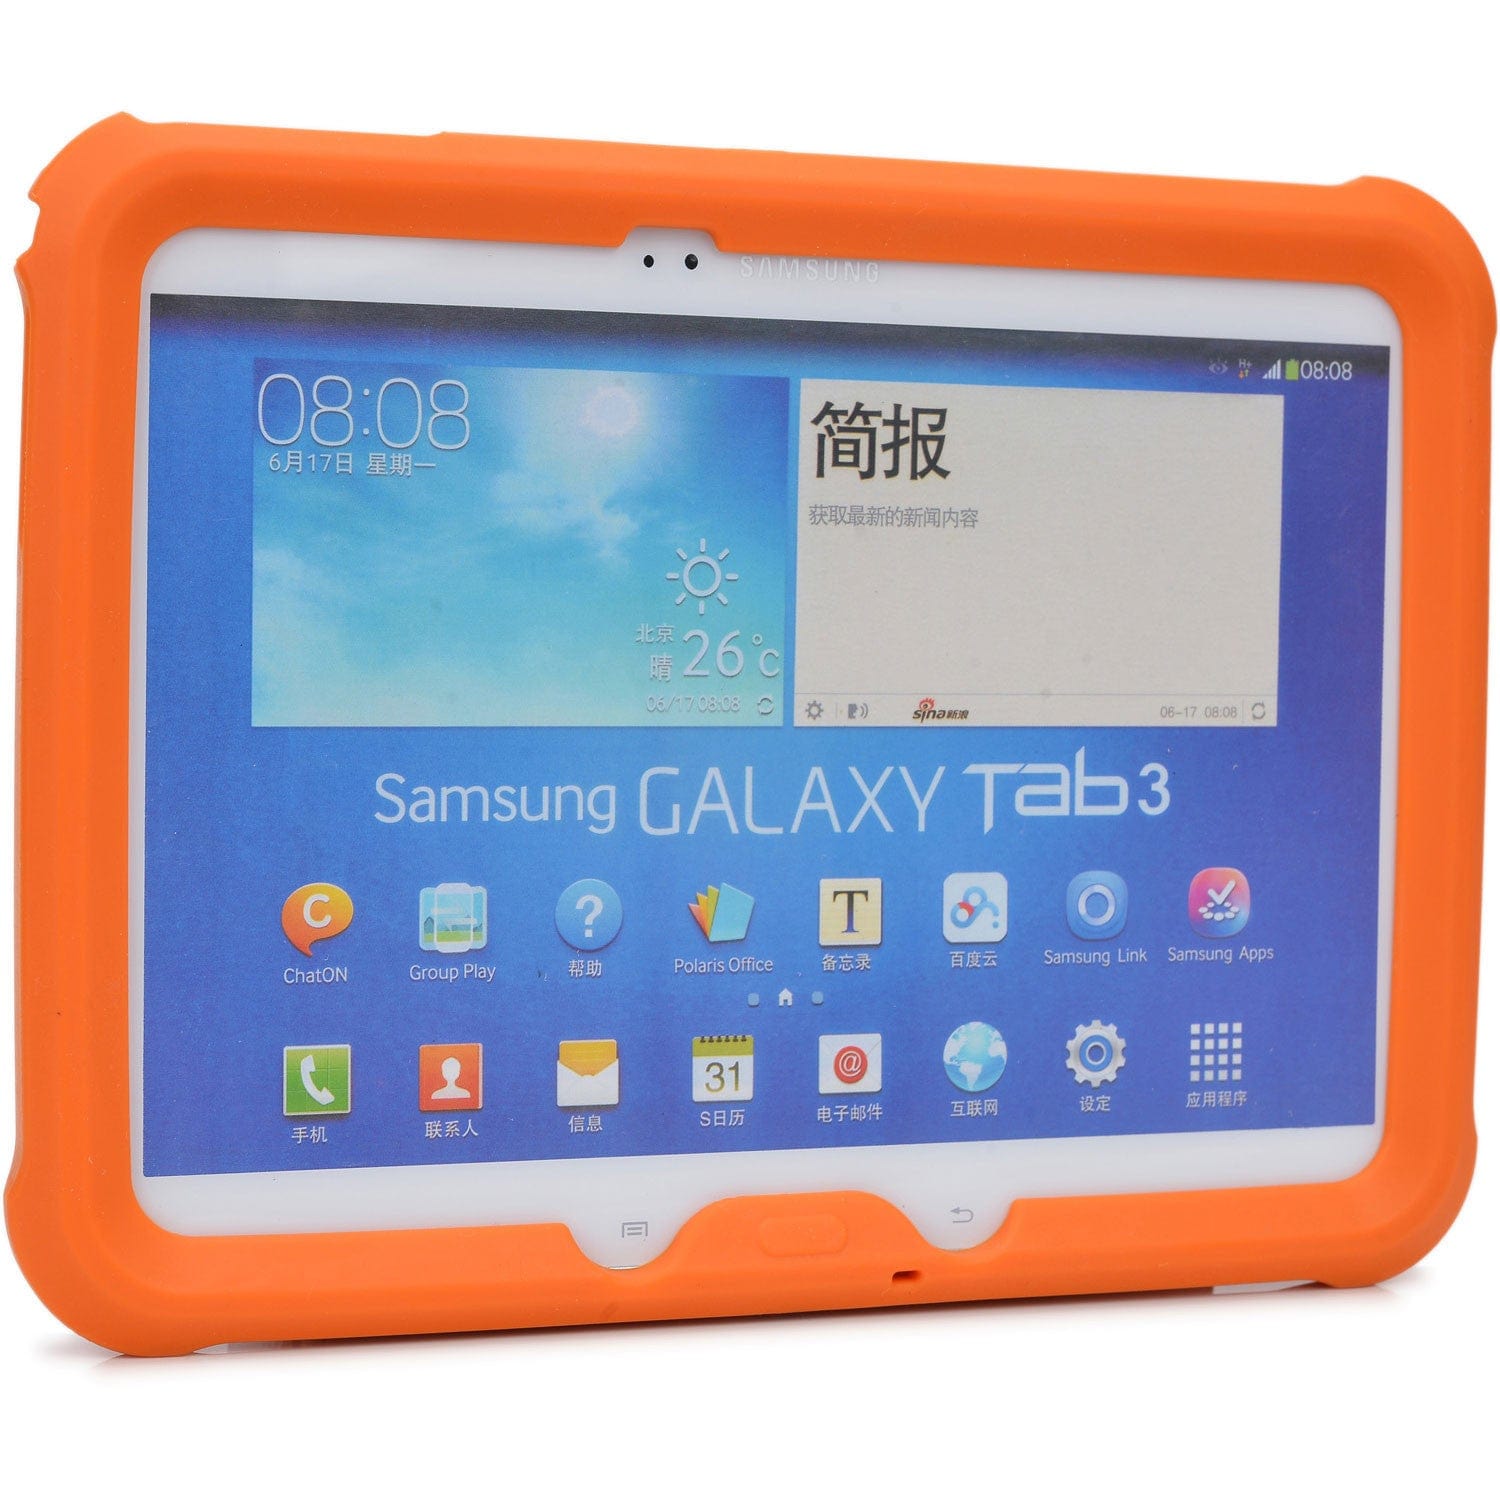 Cooper Bounce Samsung Galaxy Tab Rugged Shell - 46